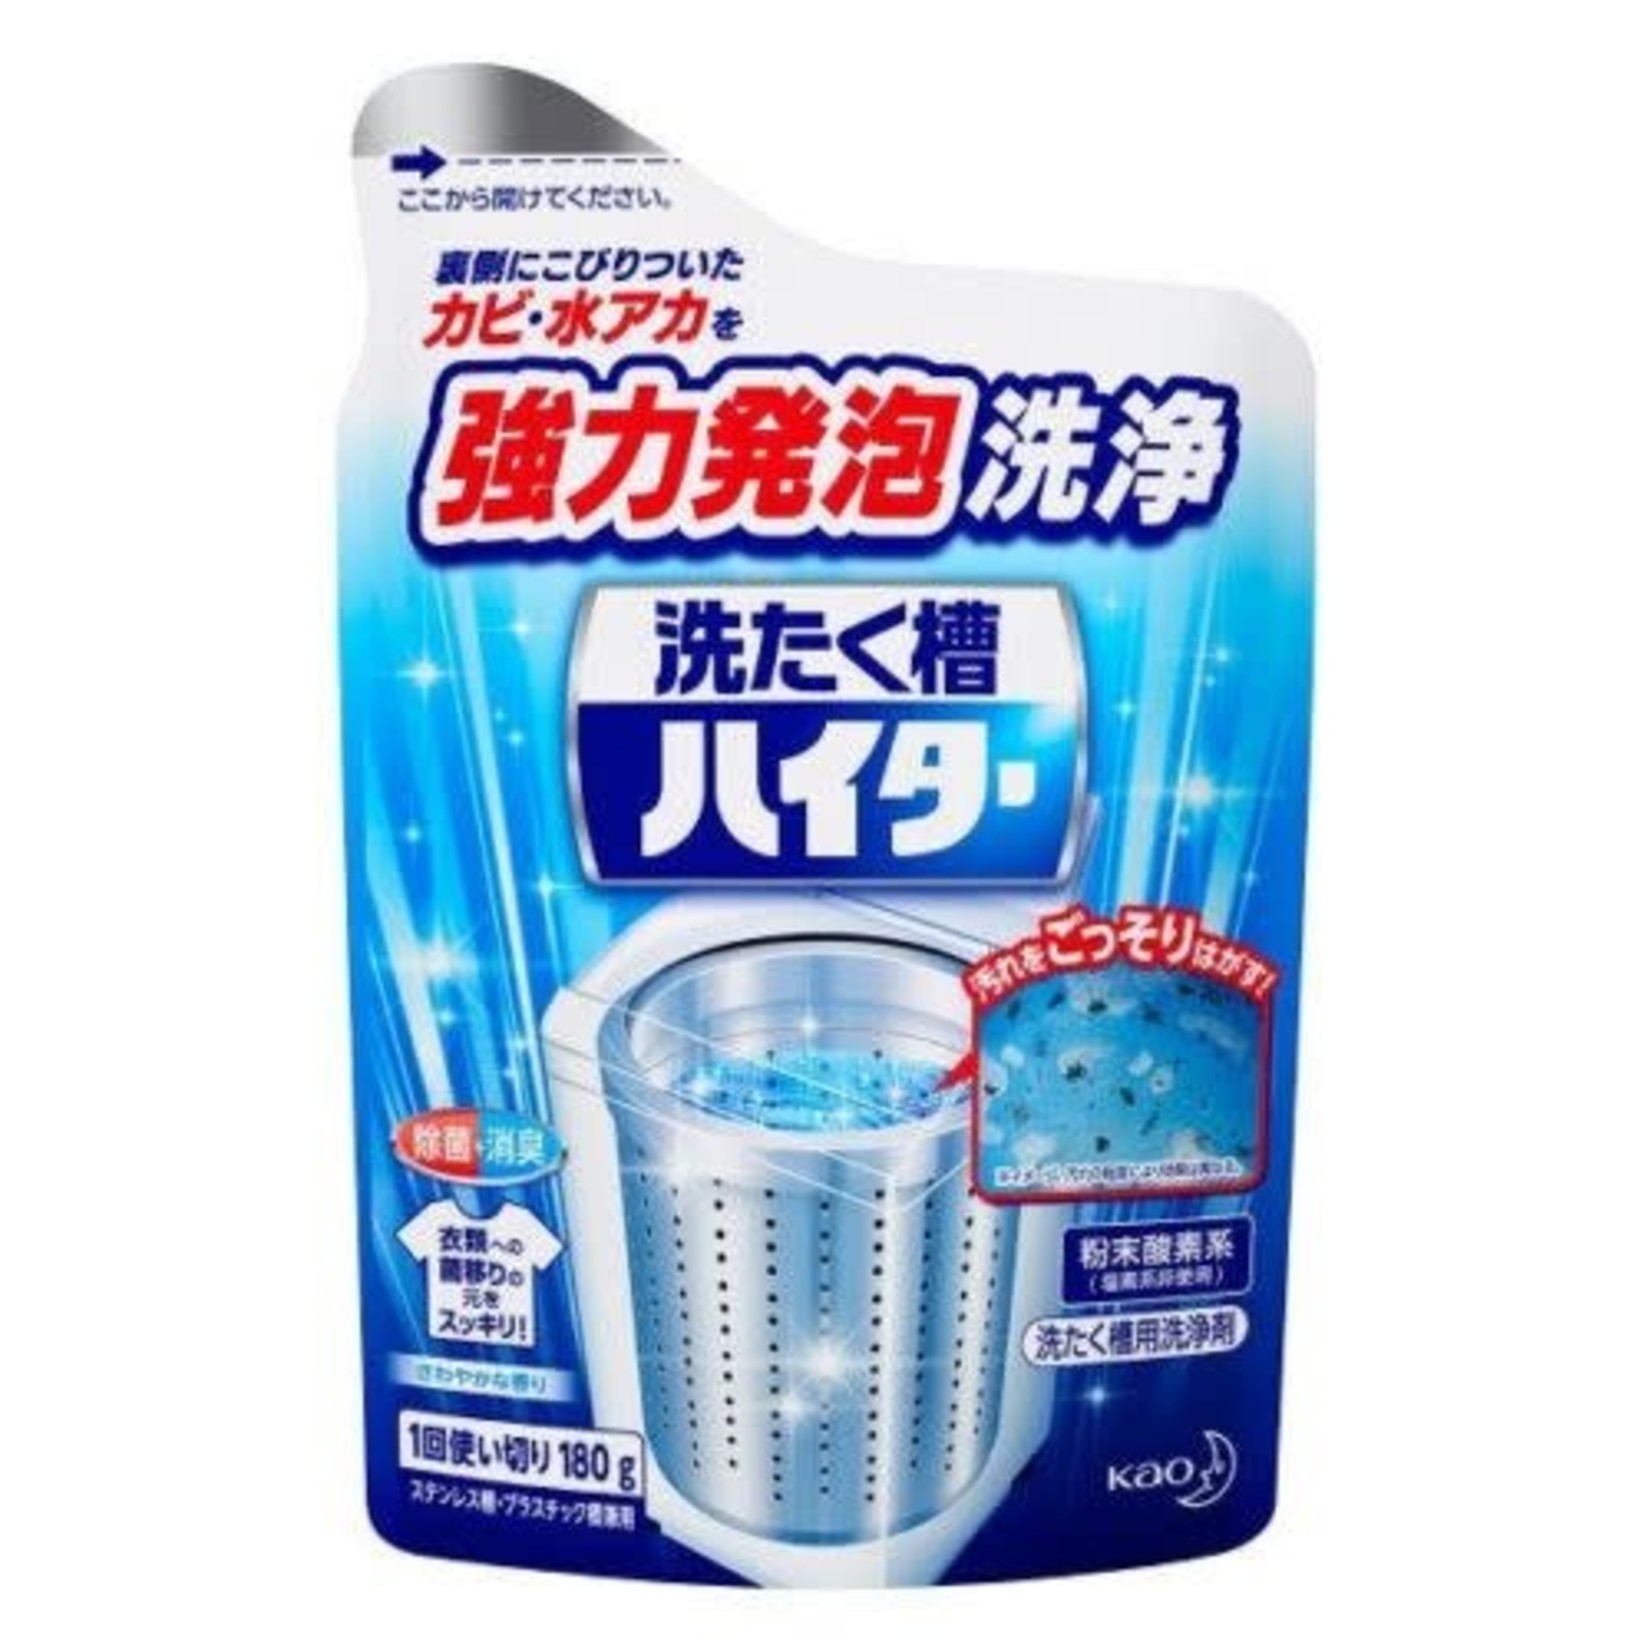 KAO Washing Machine Cleaner Powder 180g - Kao [For Cleaning Washing Machines]